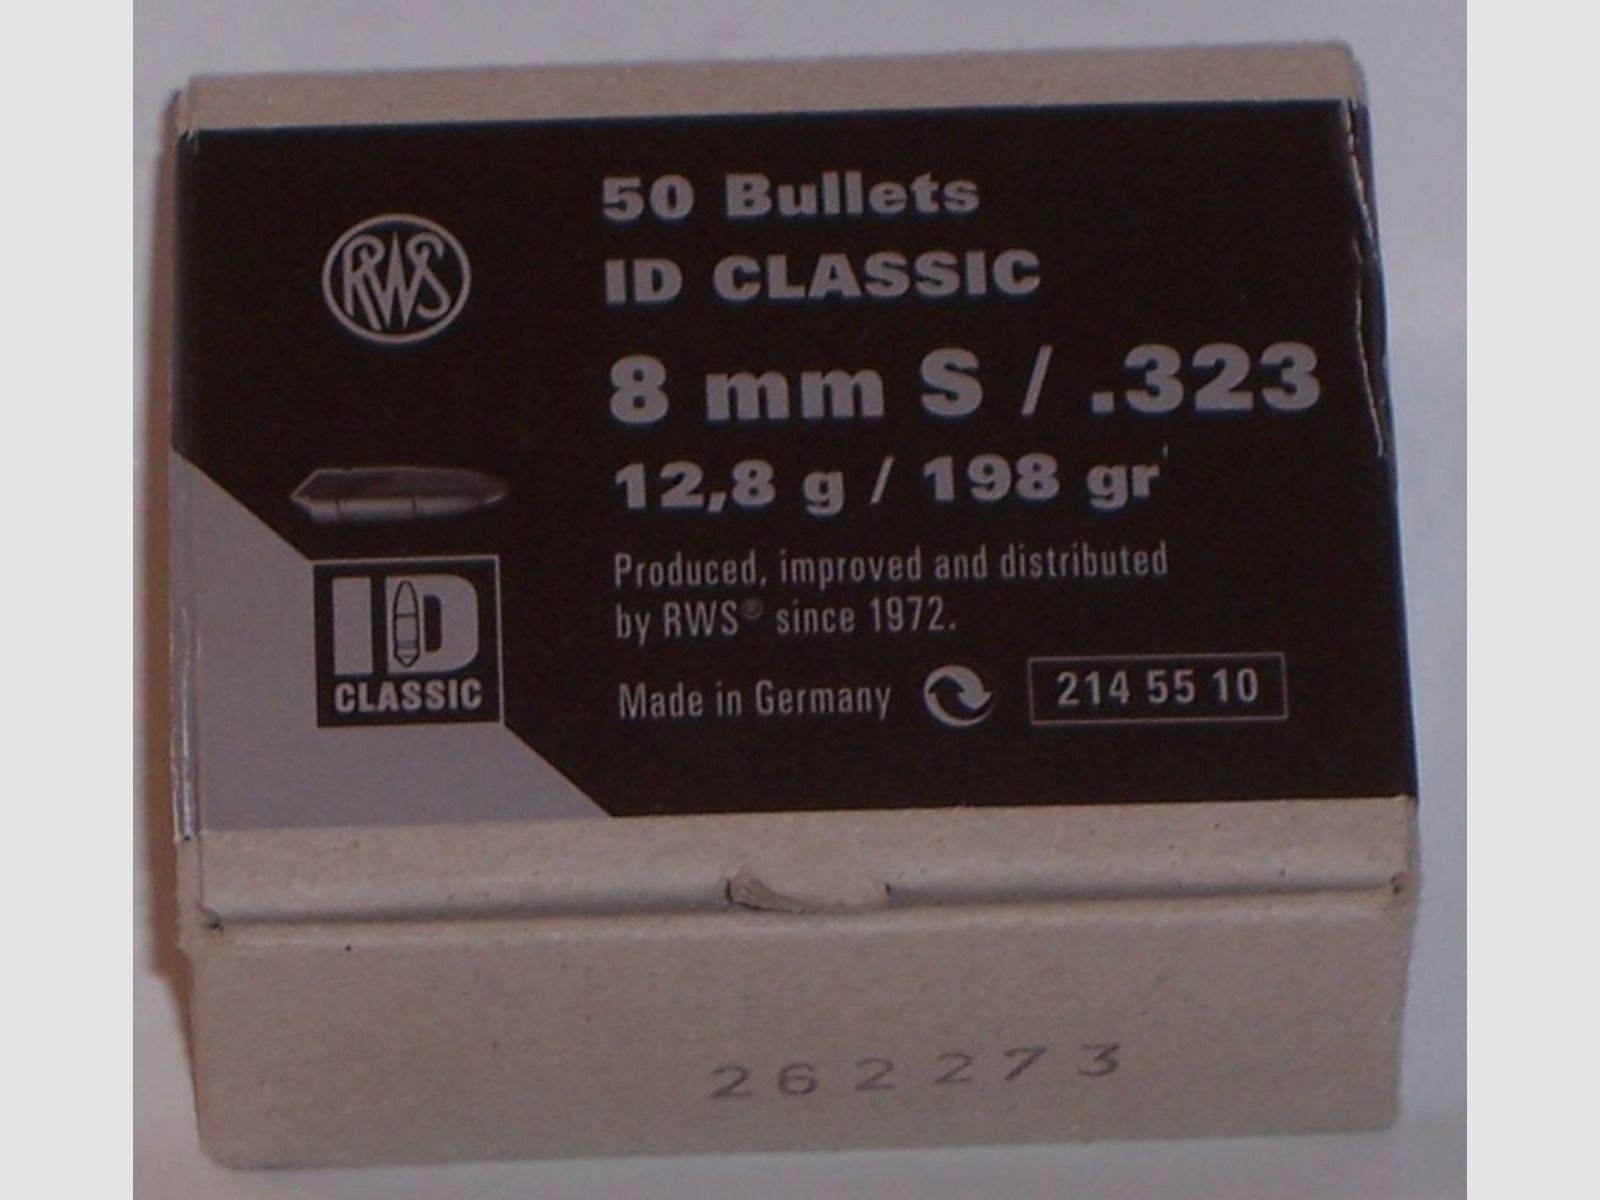 50St. RWS Geschosse 8mm(.323) - 198(12,8gramm) - ID-CLASSIC - #214 55 10